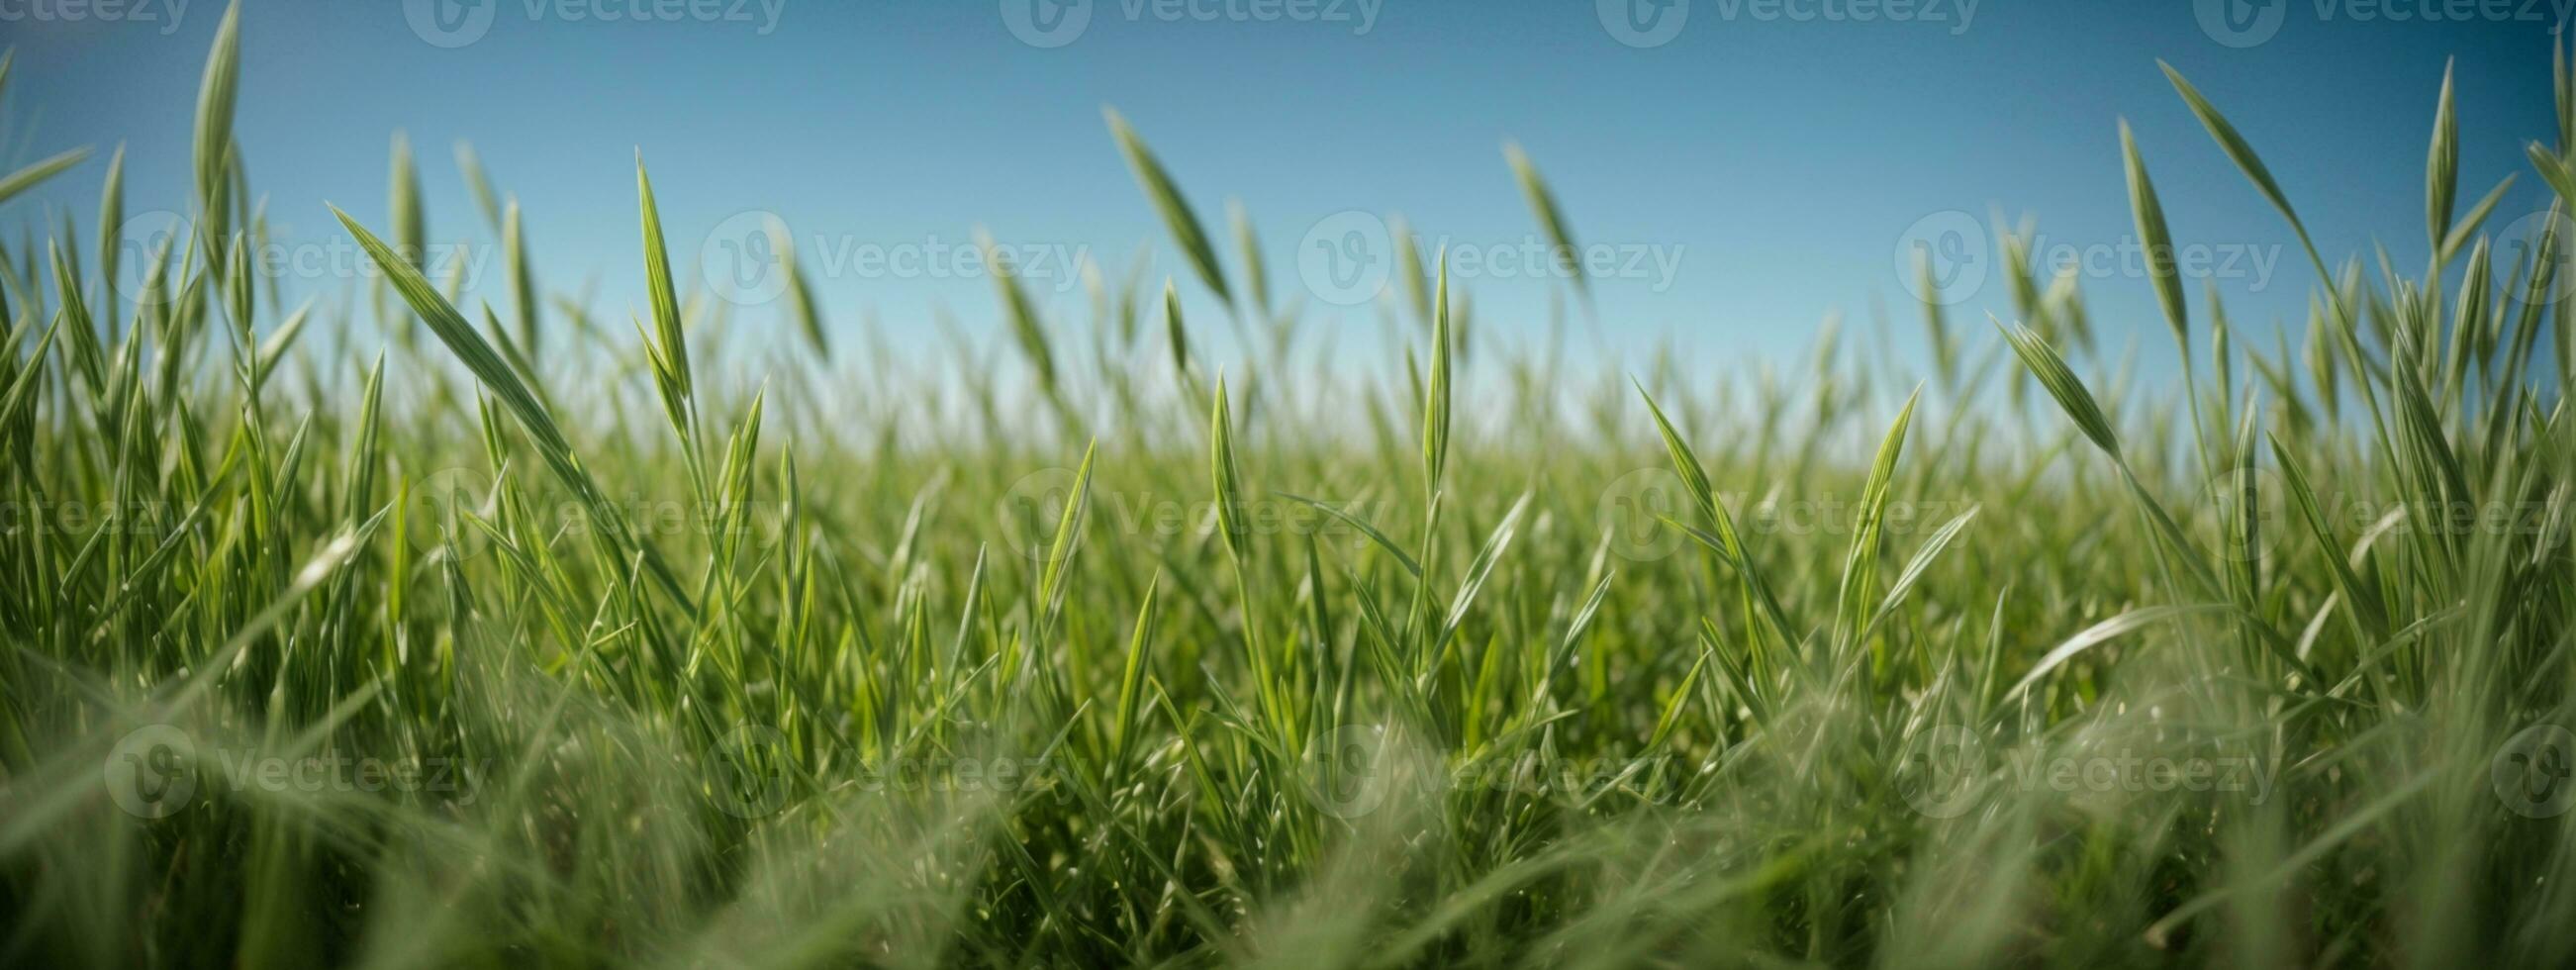 Grün Gras auf Blau klar Himmel, Frühling Natur Thema. Panorama. ai generiert foto